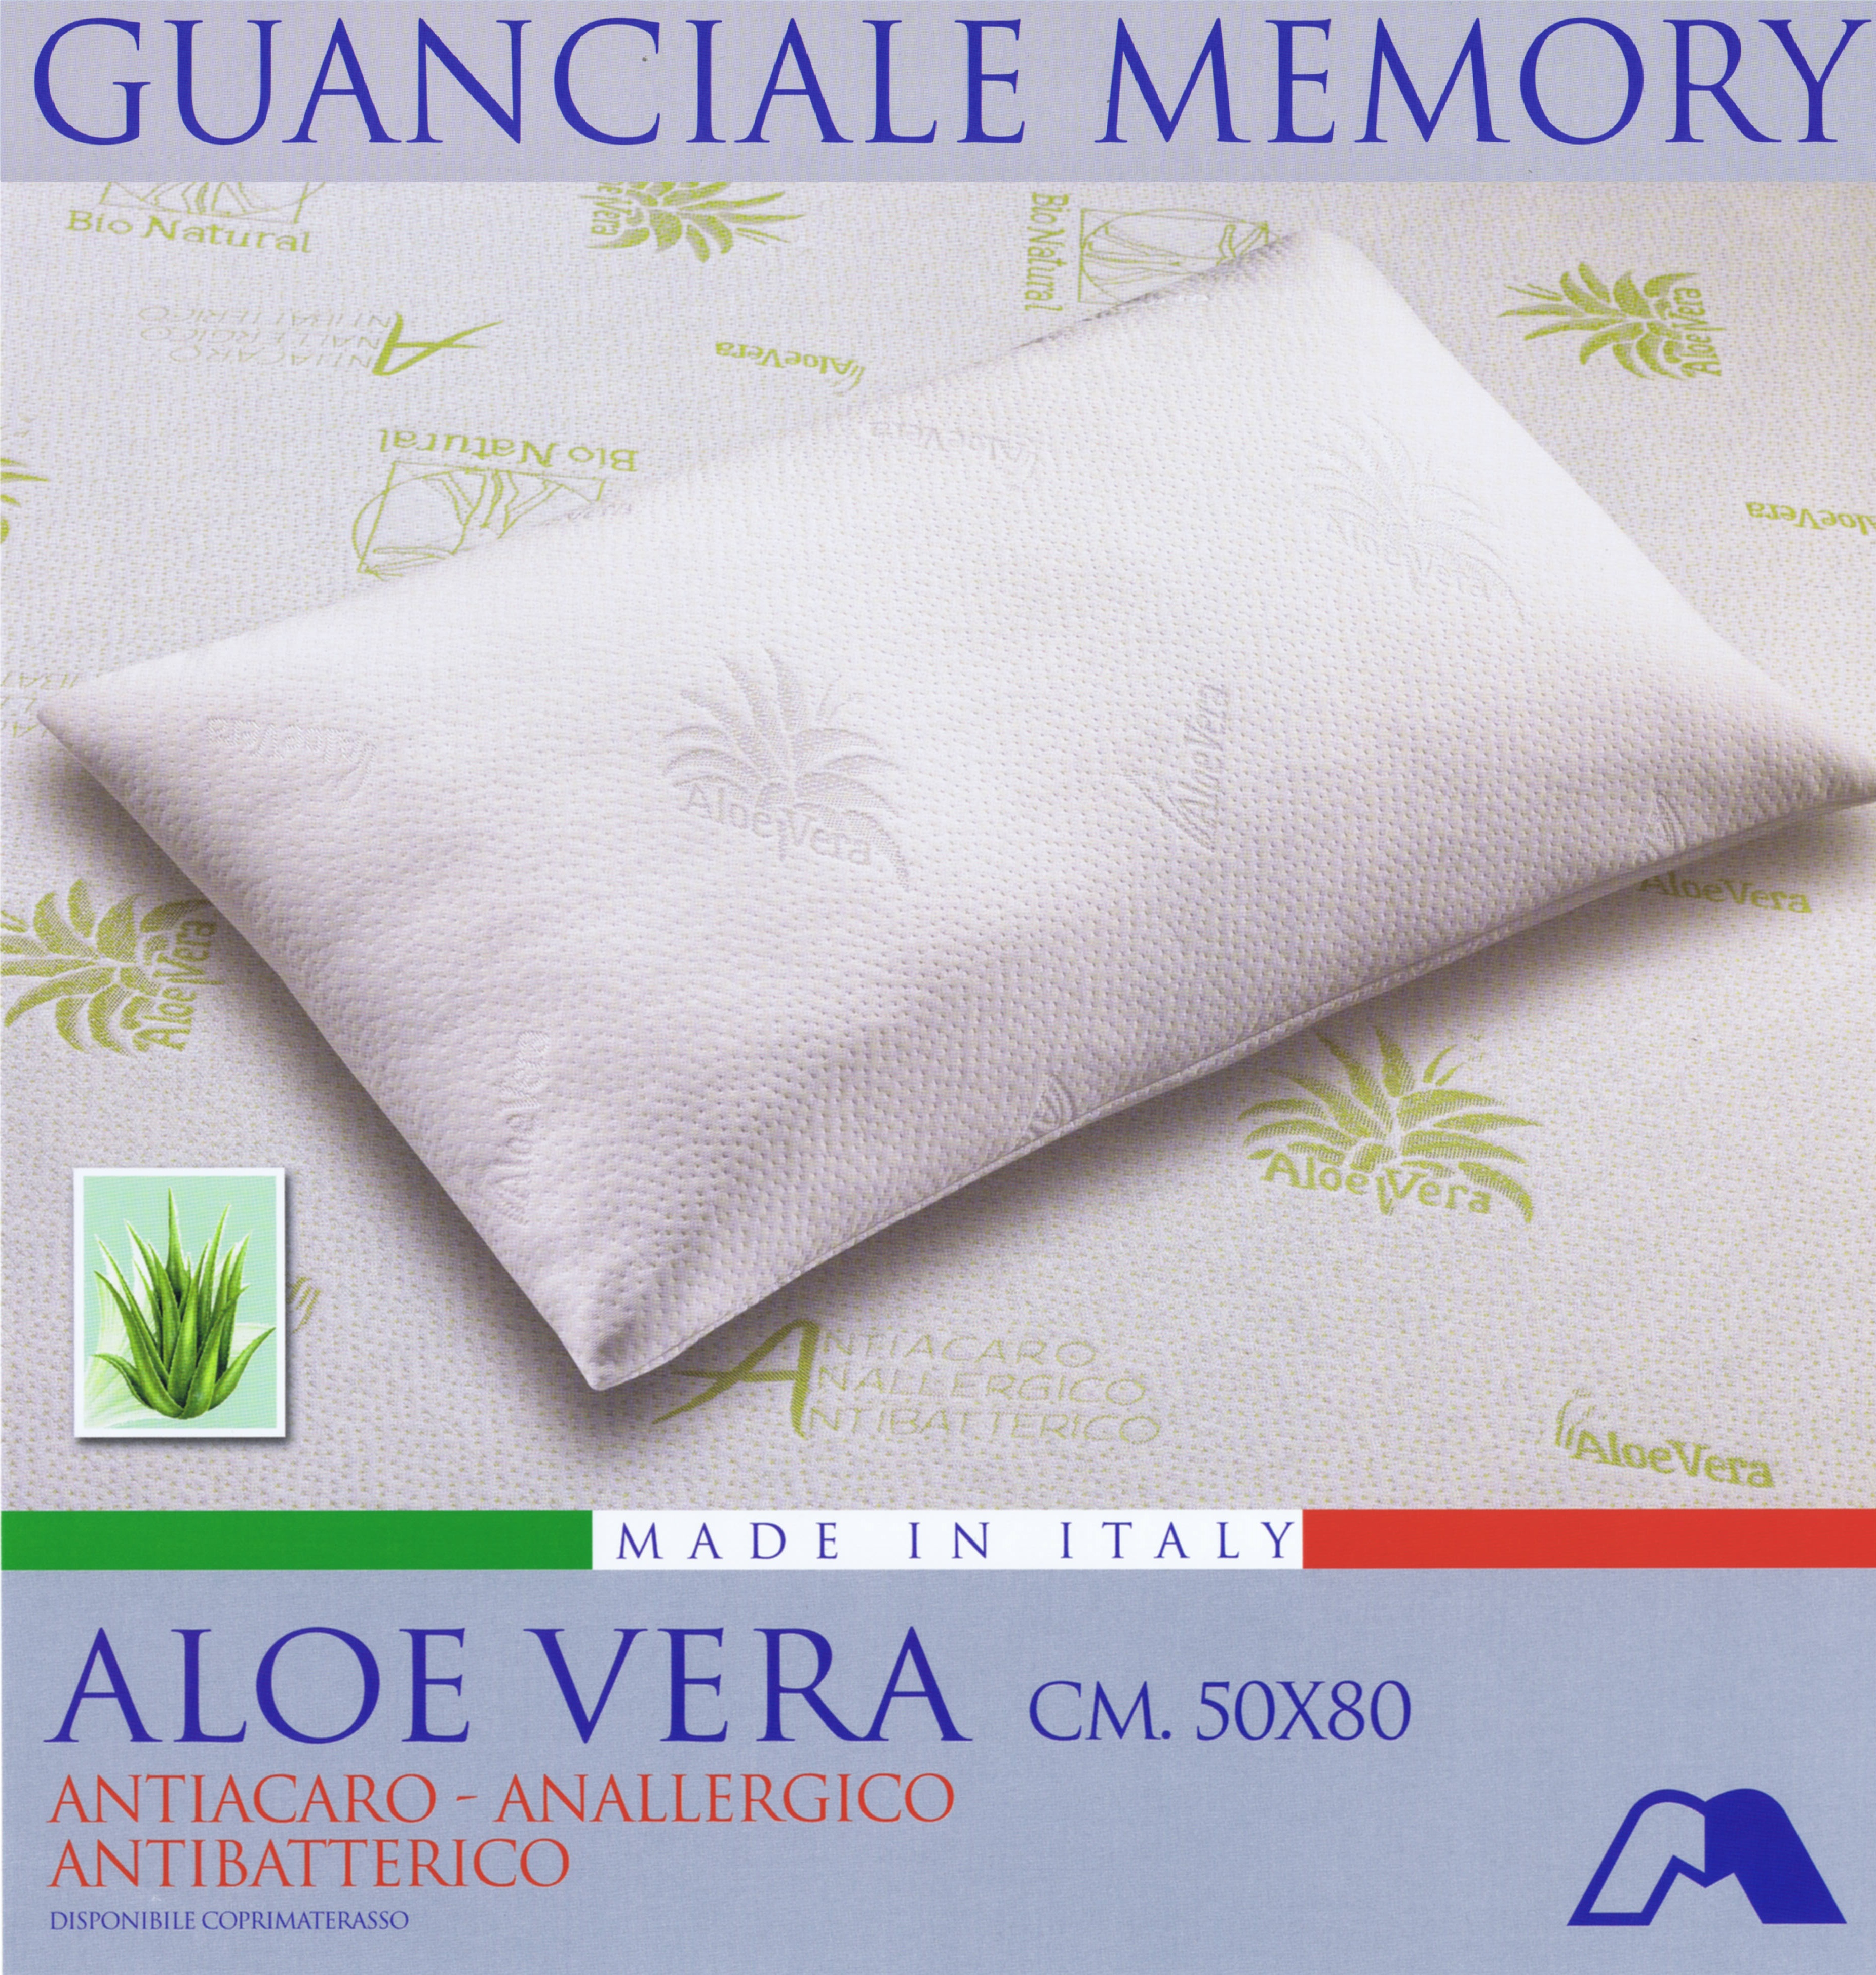 Guanciale Memory con Fodera Aloe Vera Mignani – VS Arredo Casa Shop